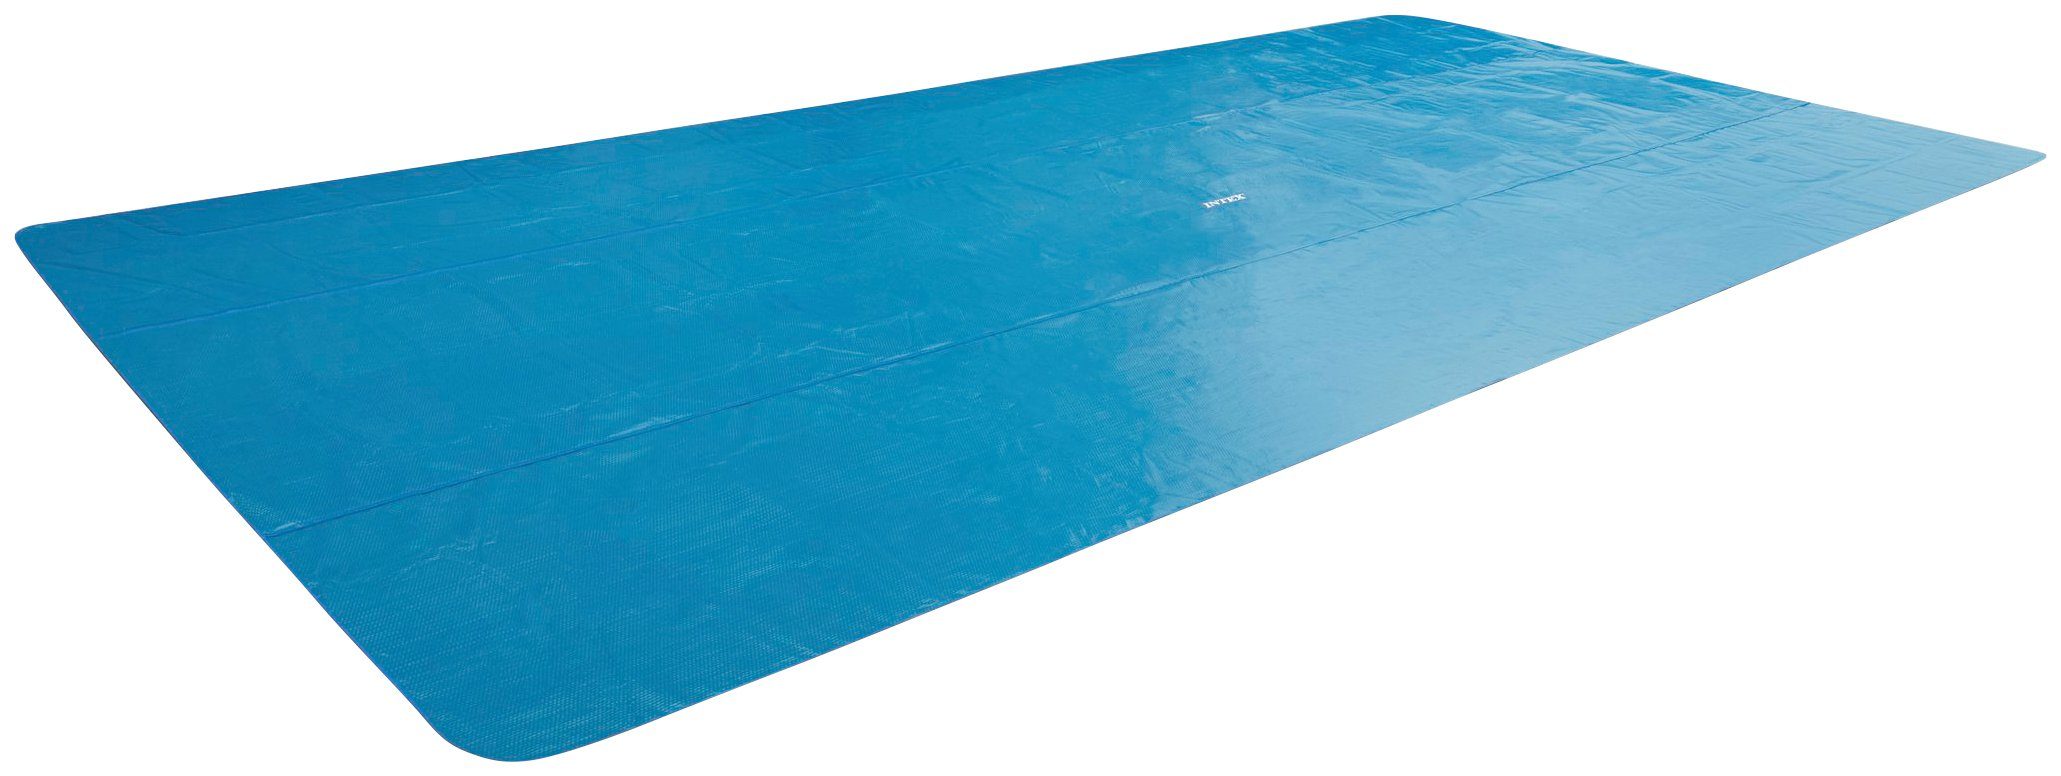 INTEX Solarzwembadhoes 378x186 cm polyetheen blauw